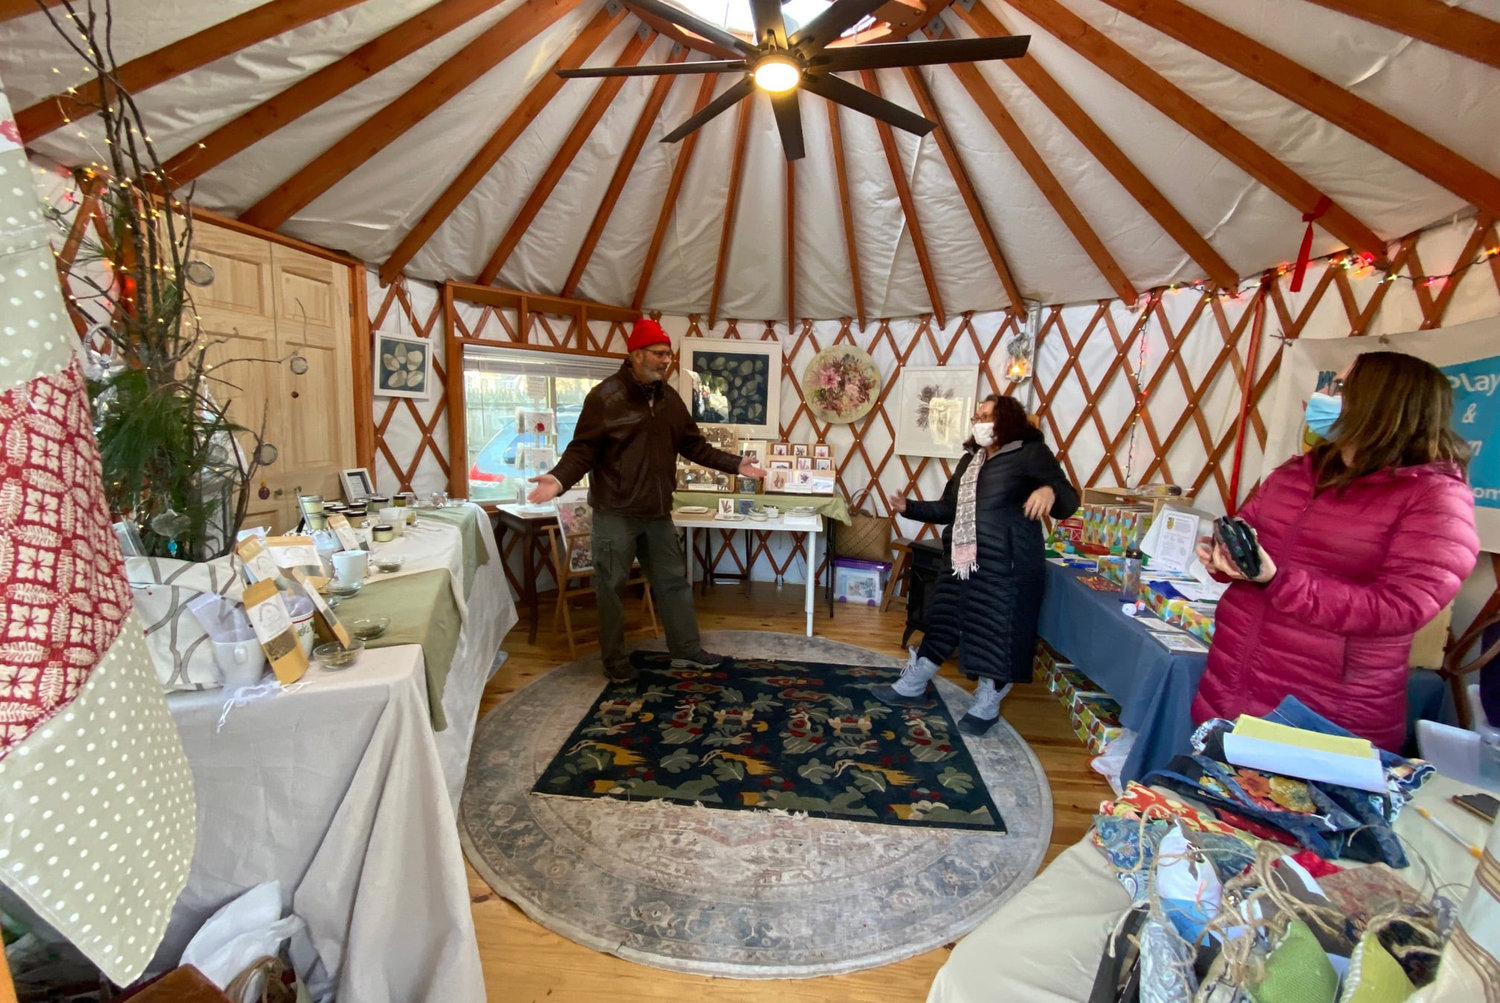 Inside the yurt at Apple Blossom Preschool for last year's yuletide event